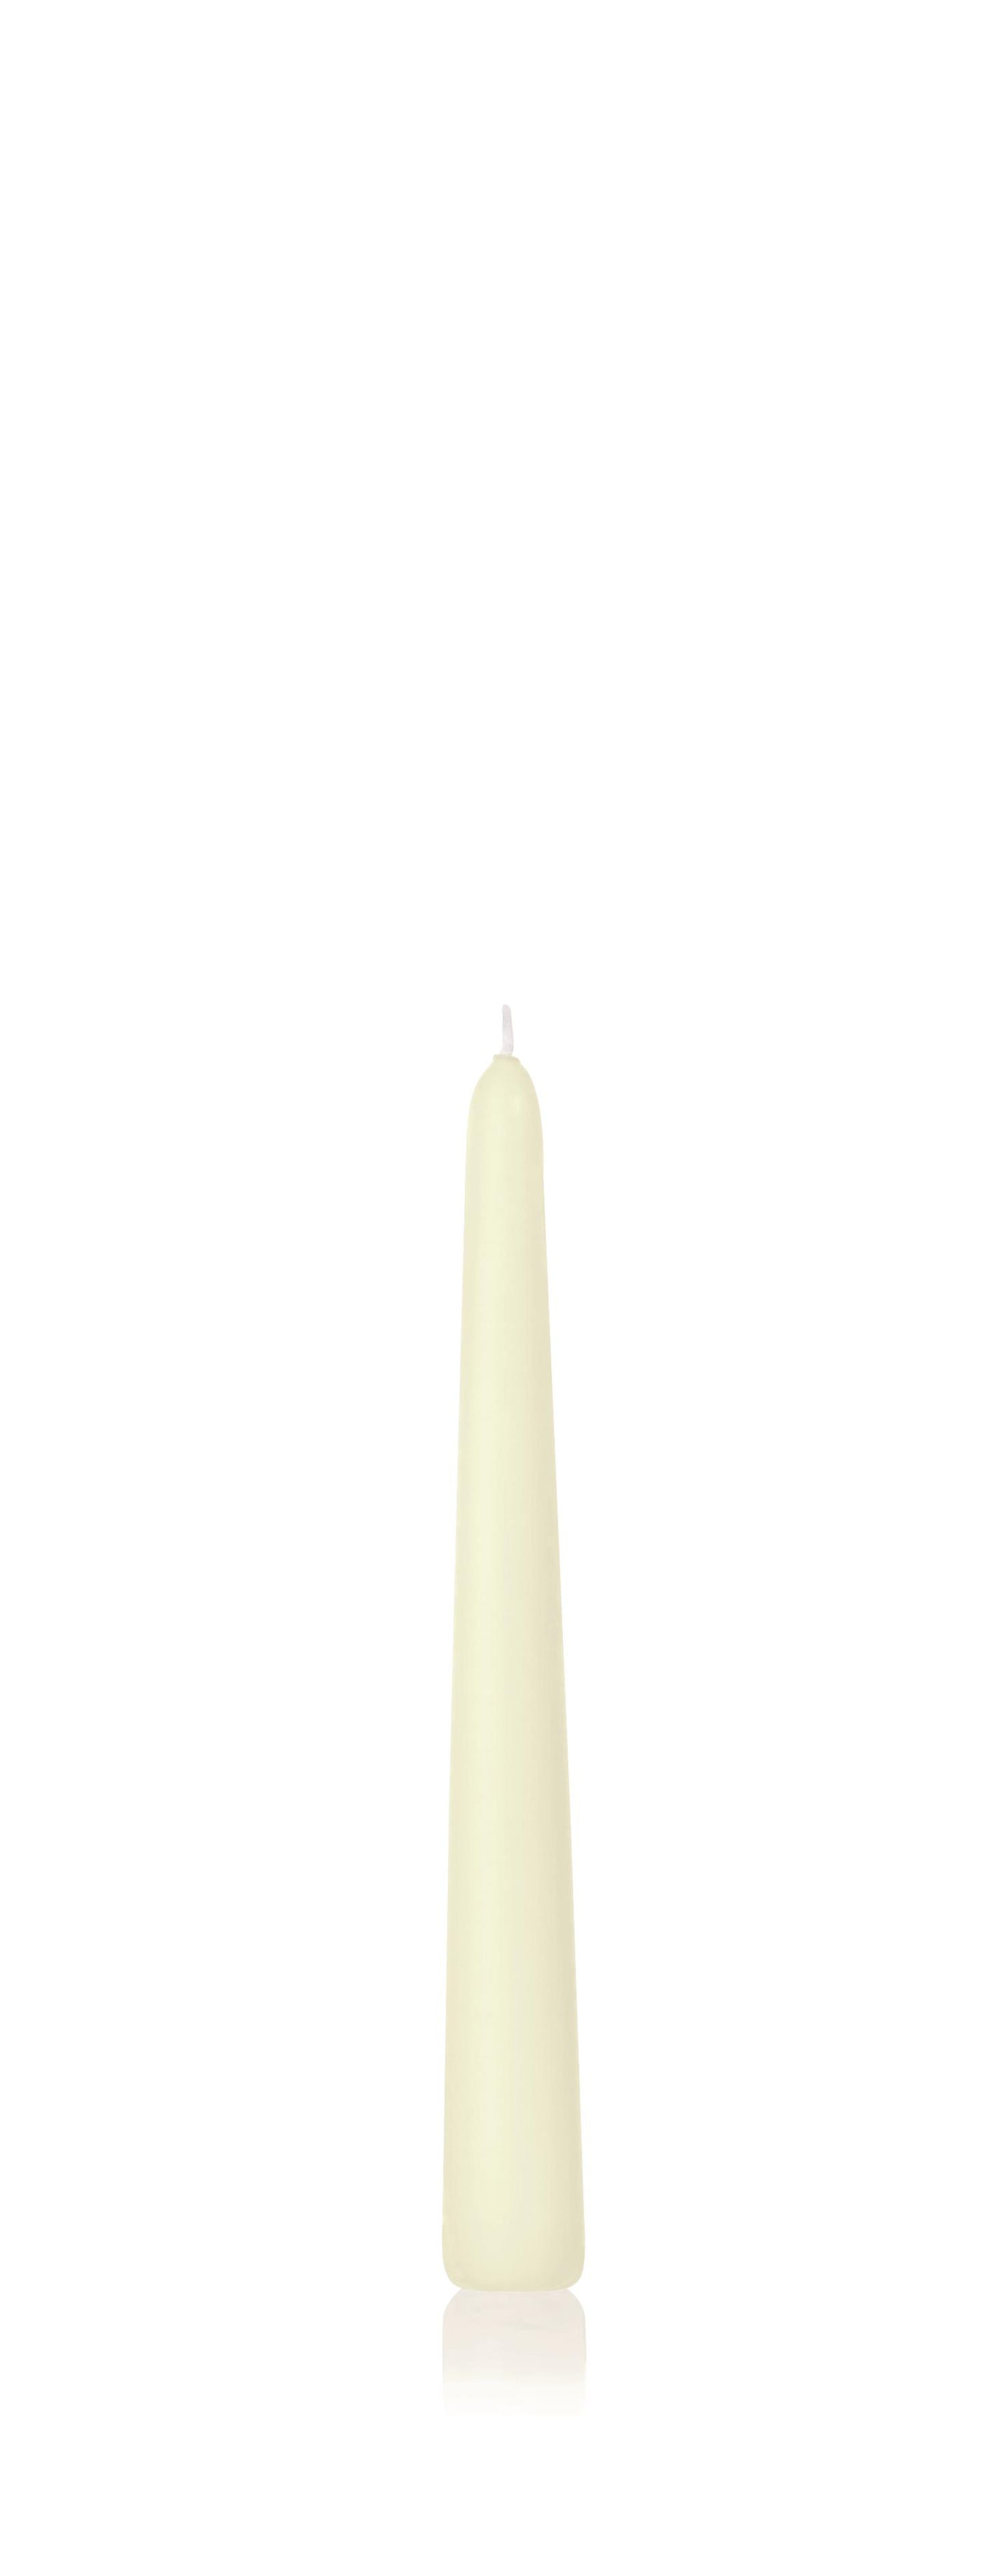 6x Konische Kerzen in Cellophan 200/20mm (Elfenbein)